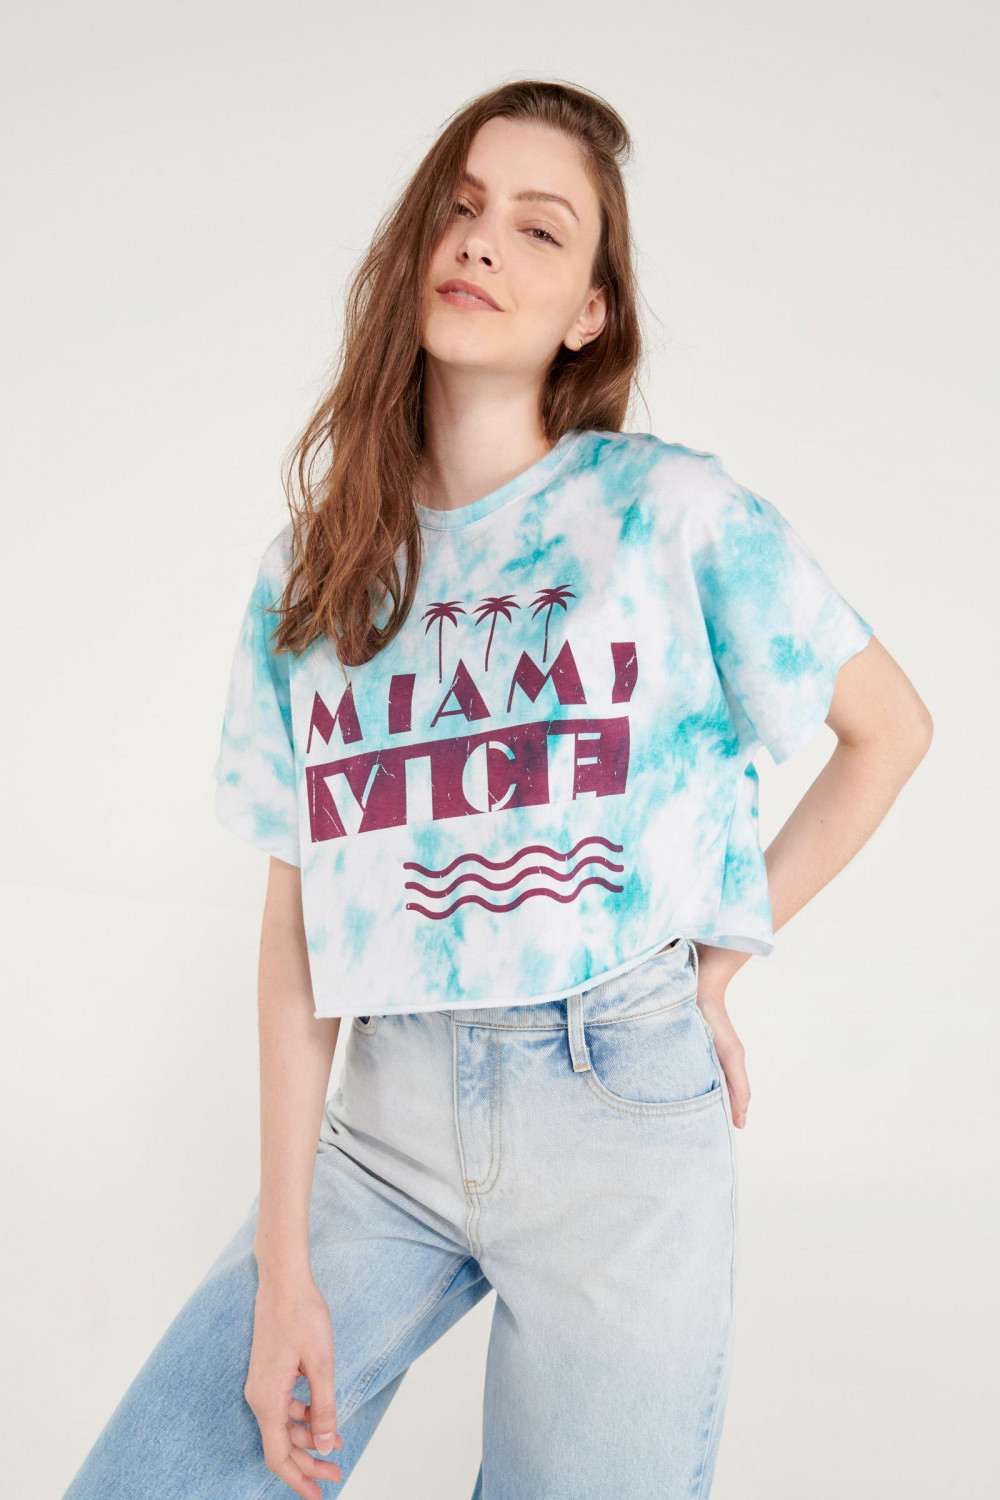 Camiseta azul claro tie dye manga corta con diseño de Miami Vice